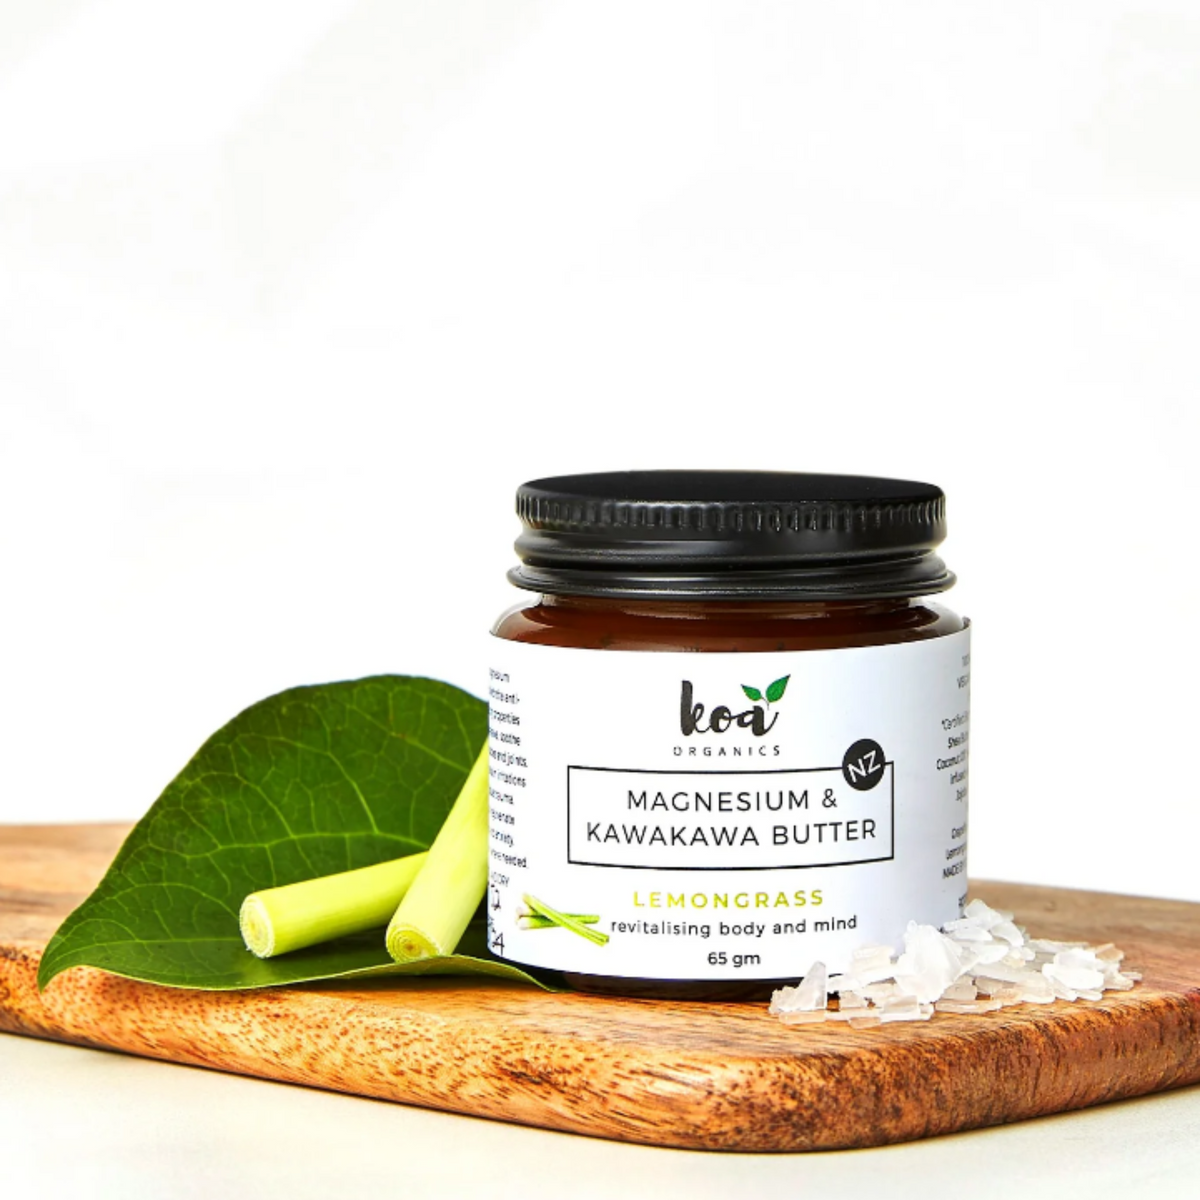 Koa Organics - Magnesium + Kawakawa Butter with Lemongrass (Med) 65gm